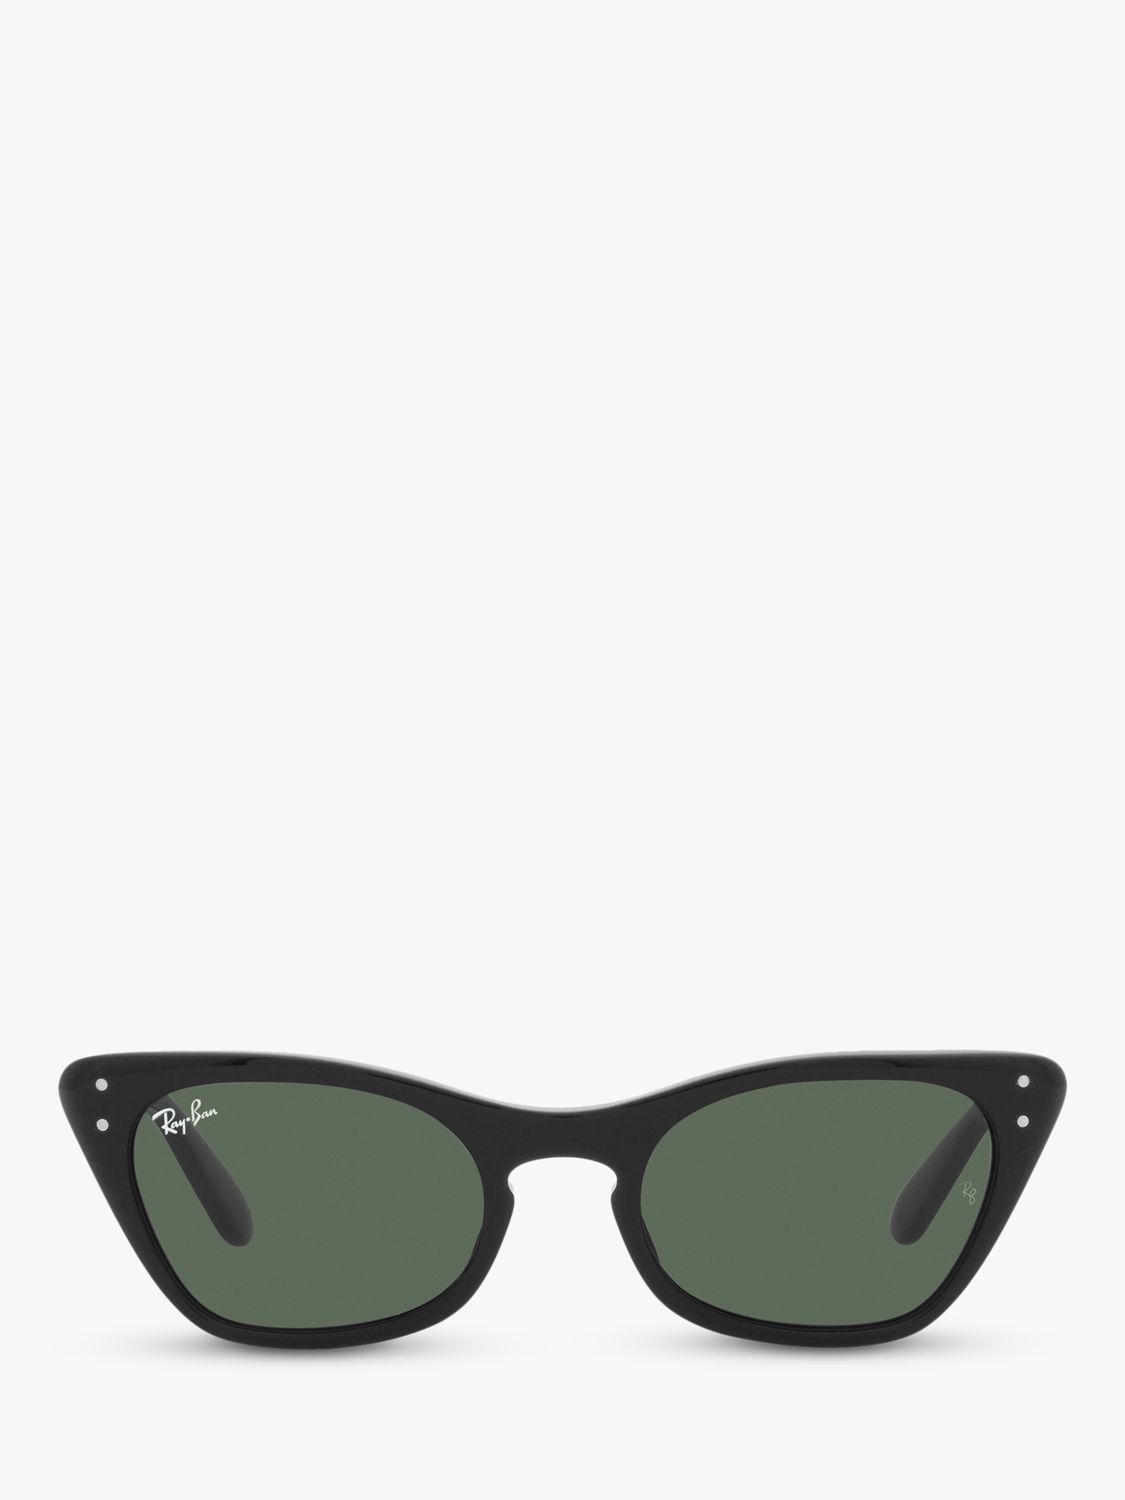 Buy Ray-Ban RJ9099S Junior Miss Burbank Cat's Eye Sunglasses, Black/Green Online at johnlewis.com